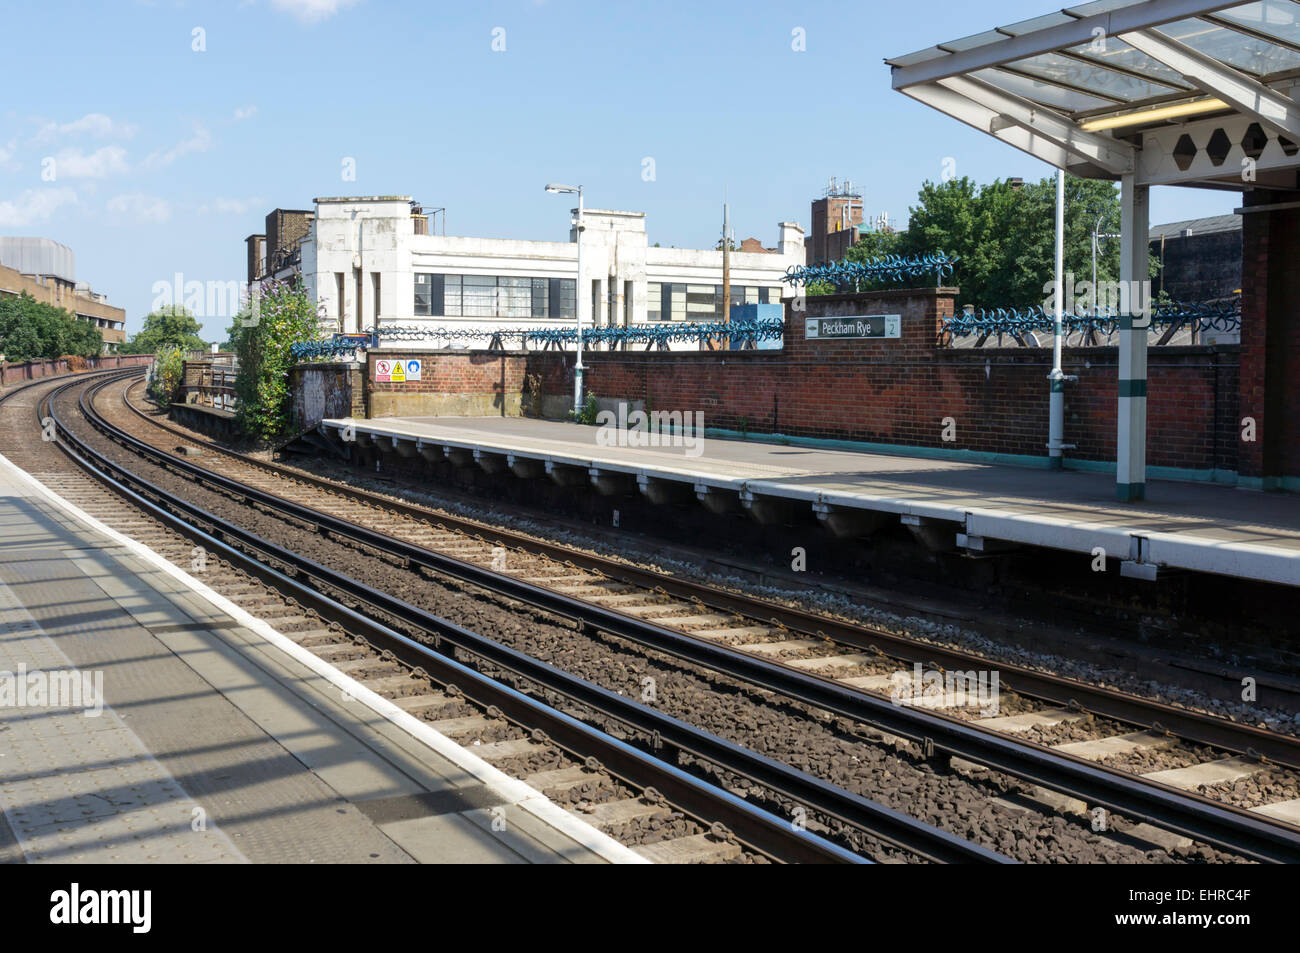 Peckham Rye railway station on an embankment in South London. Stock Photo